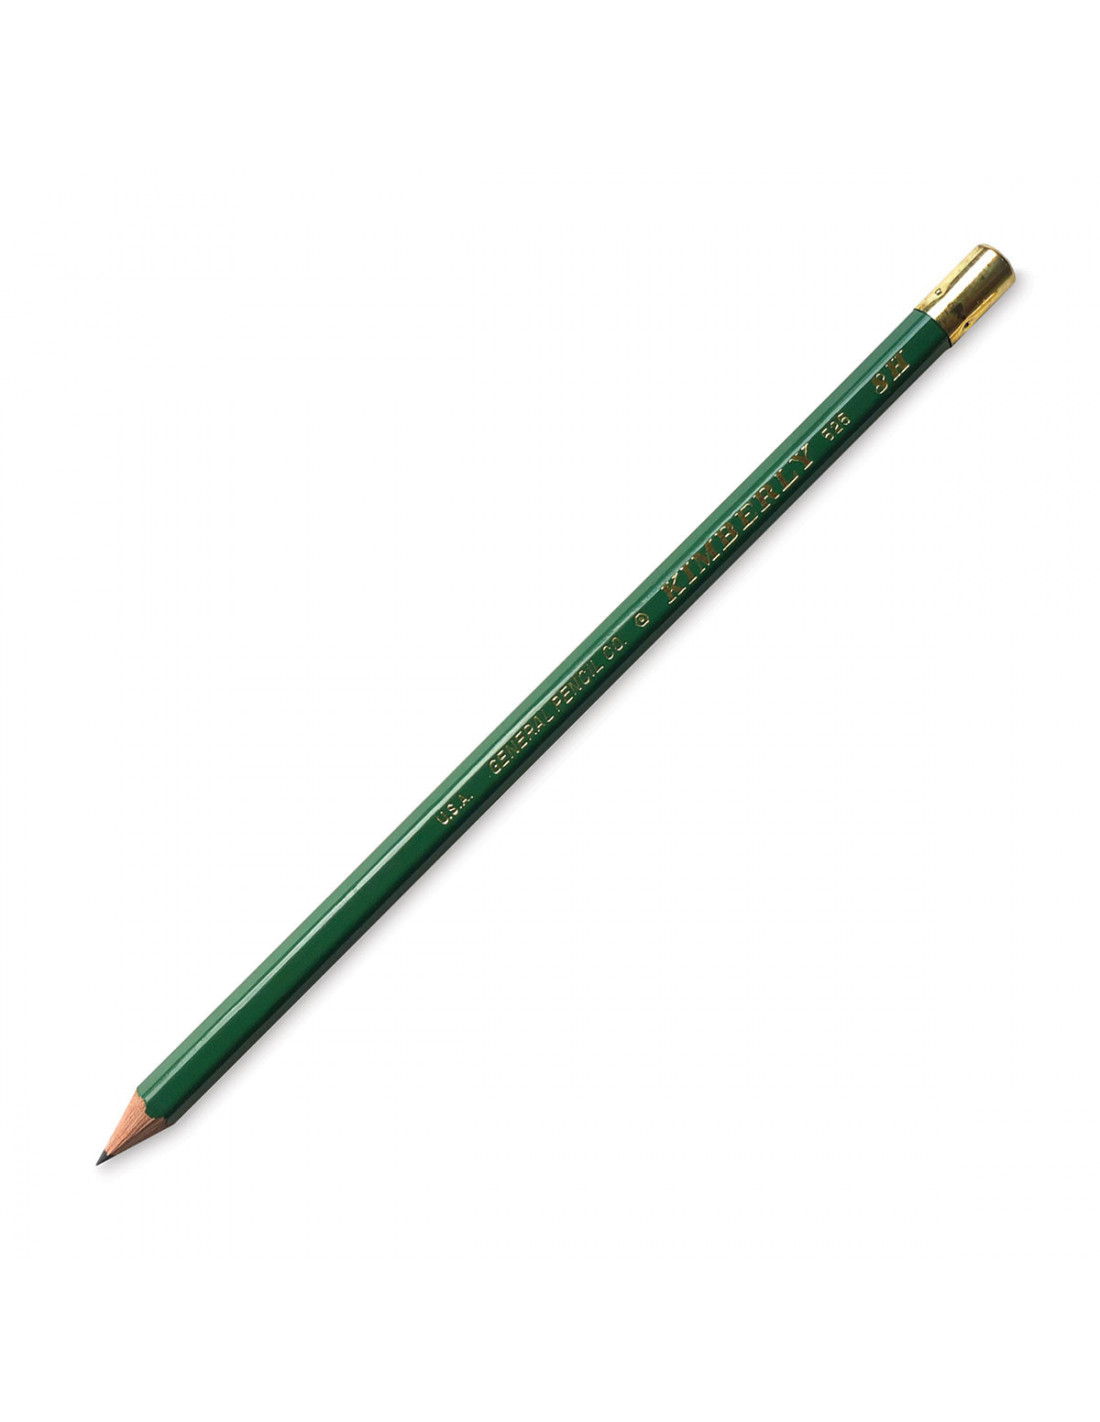 8H Graphite Pencil - Kimberly 525 - General Pencil Company